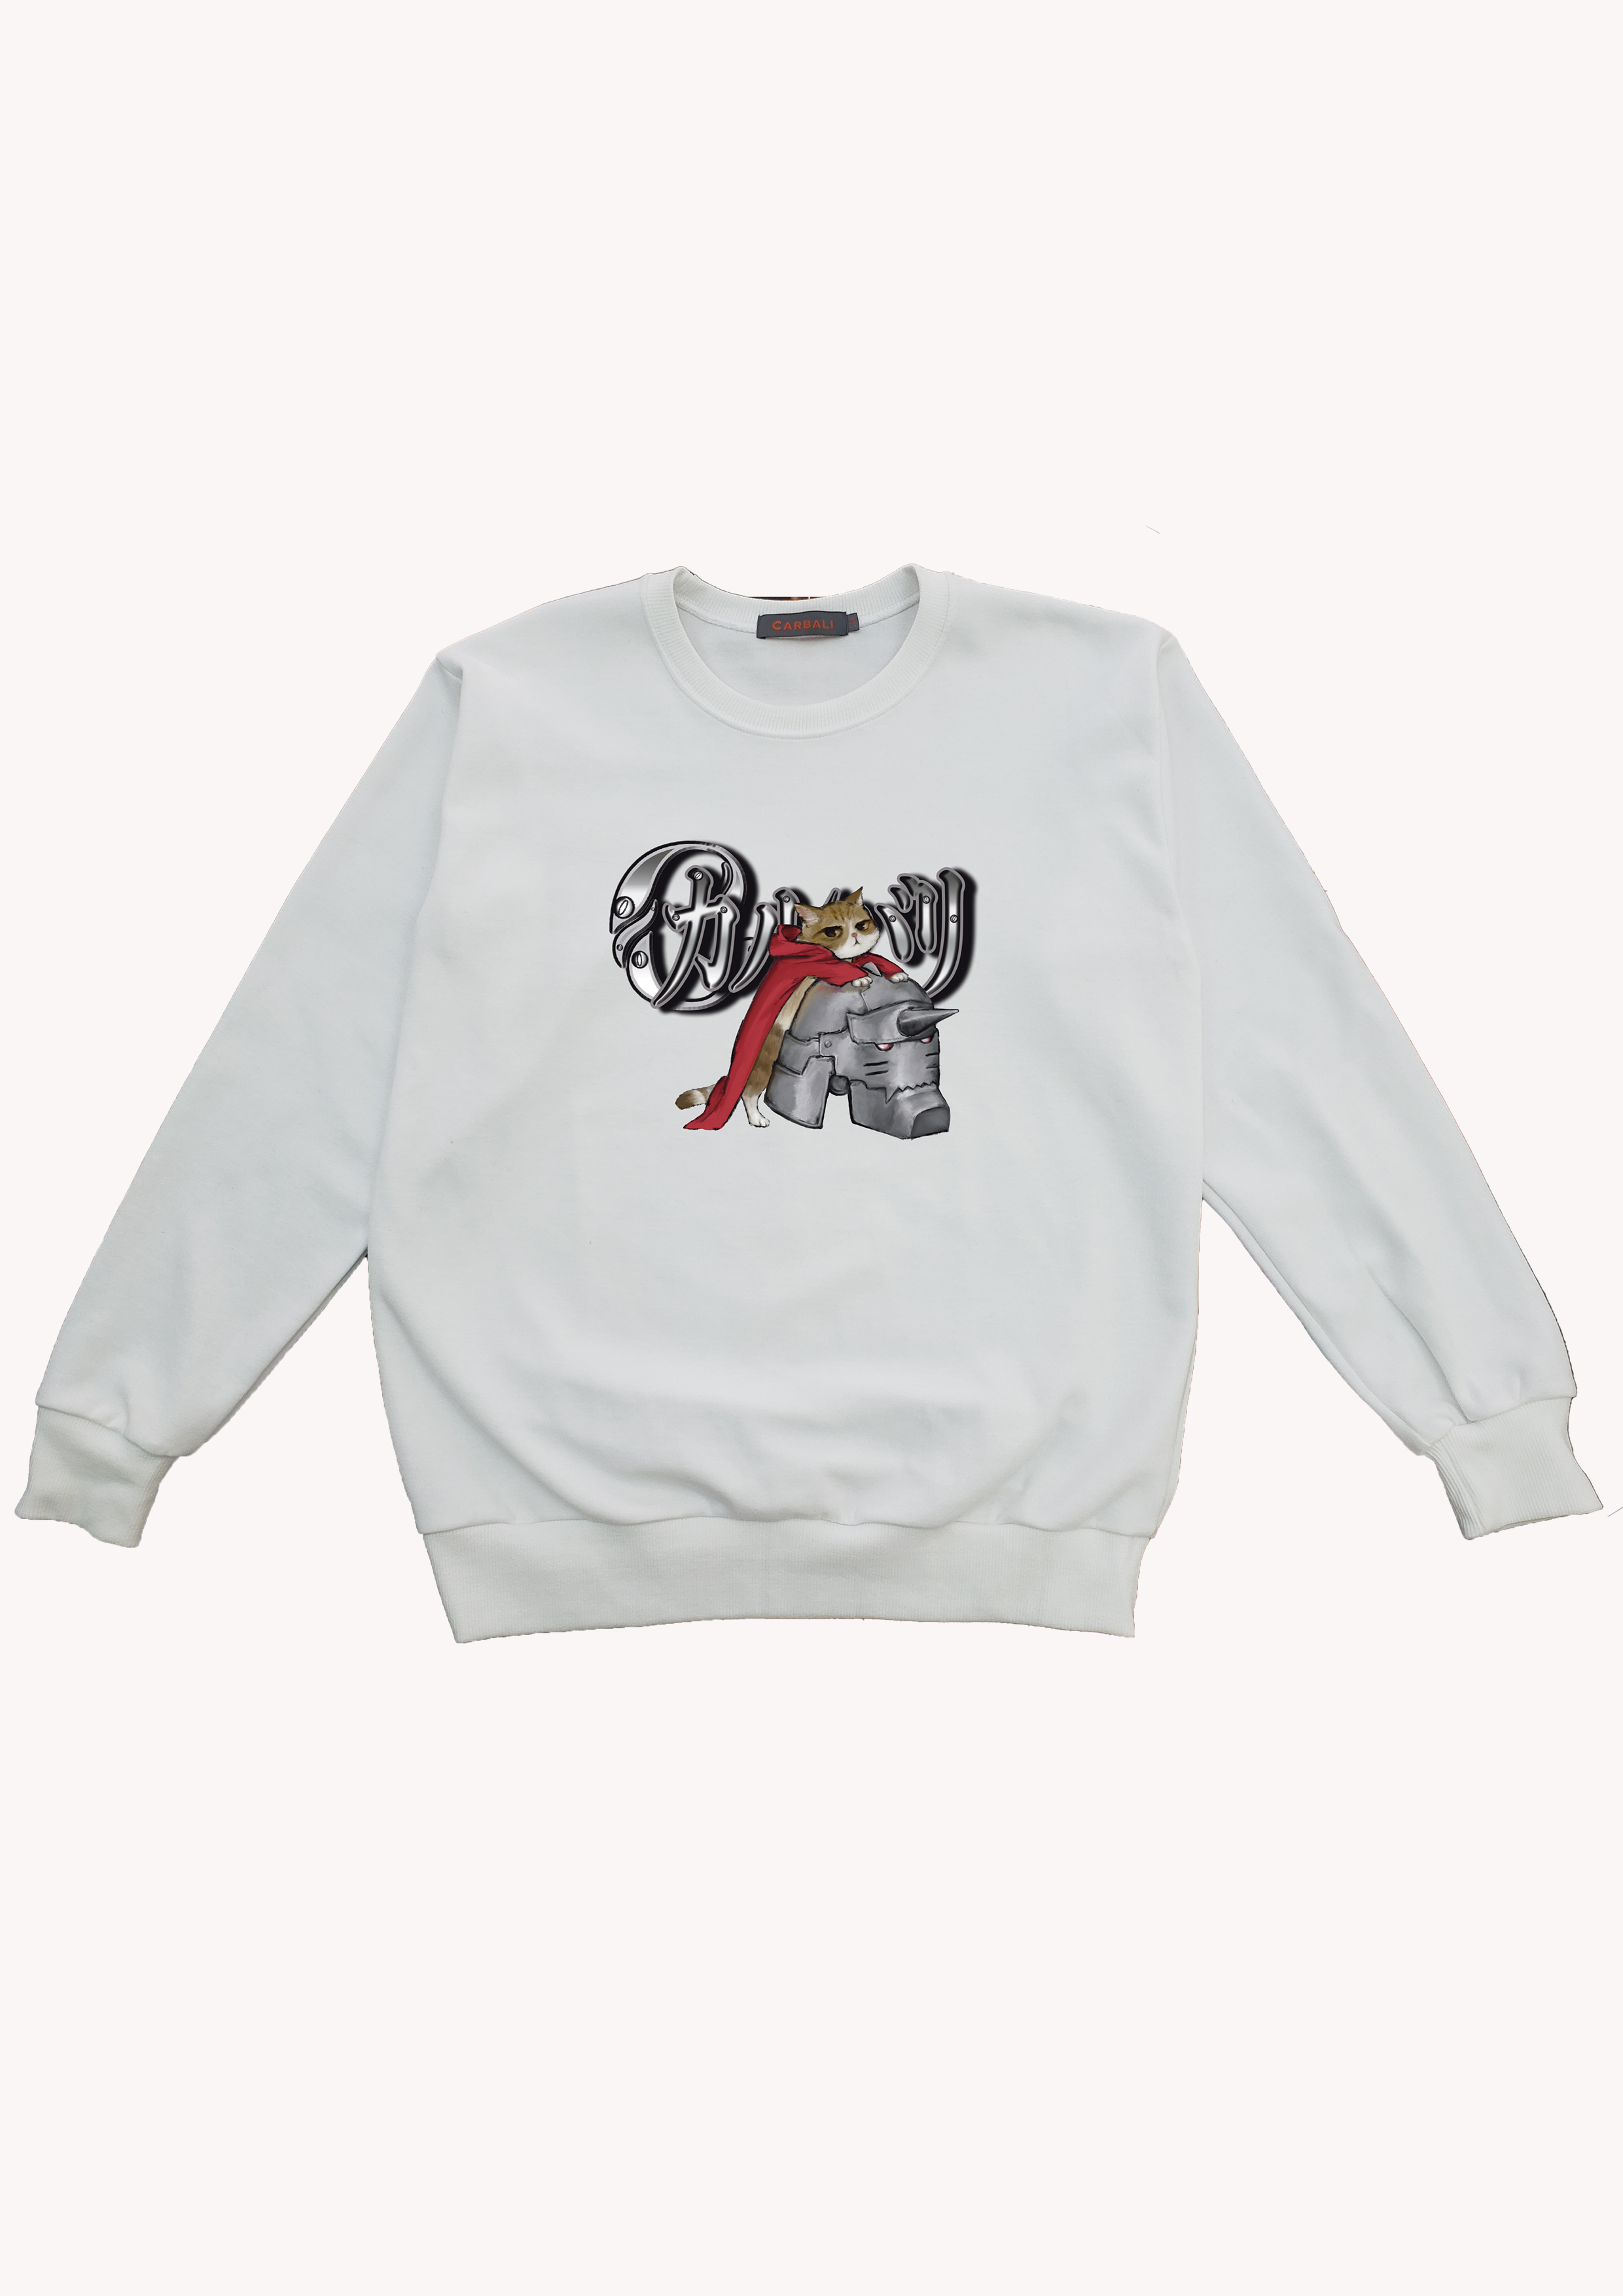 100% Cotton Graphic Sweater